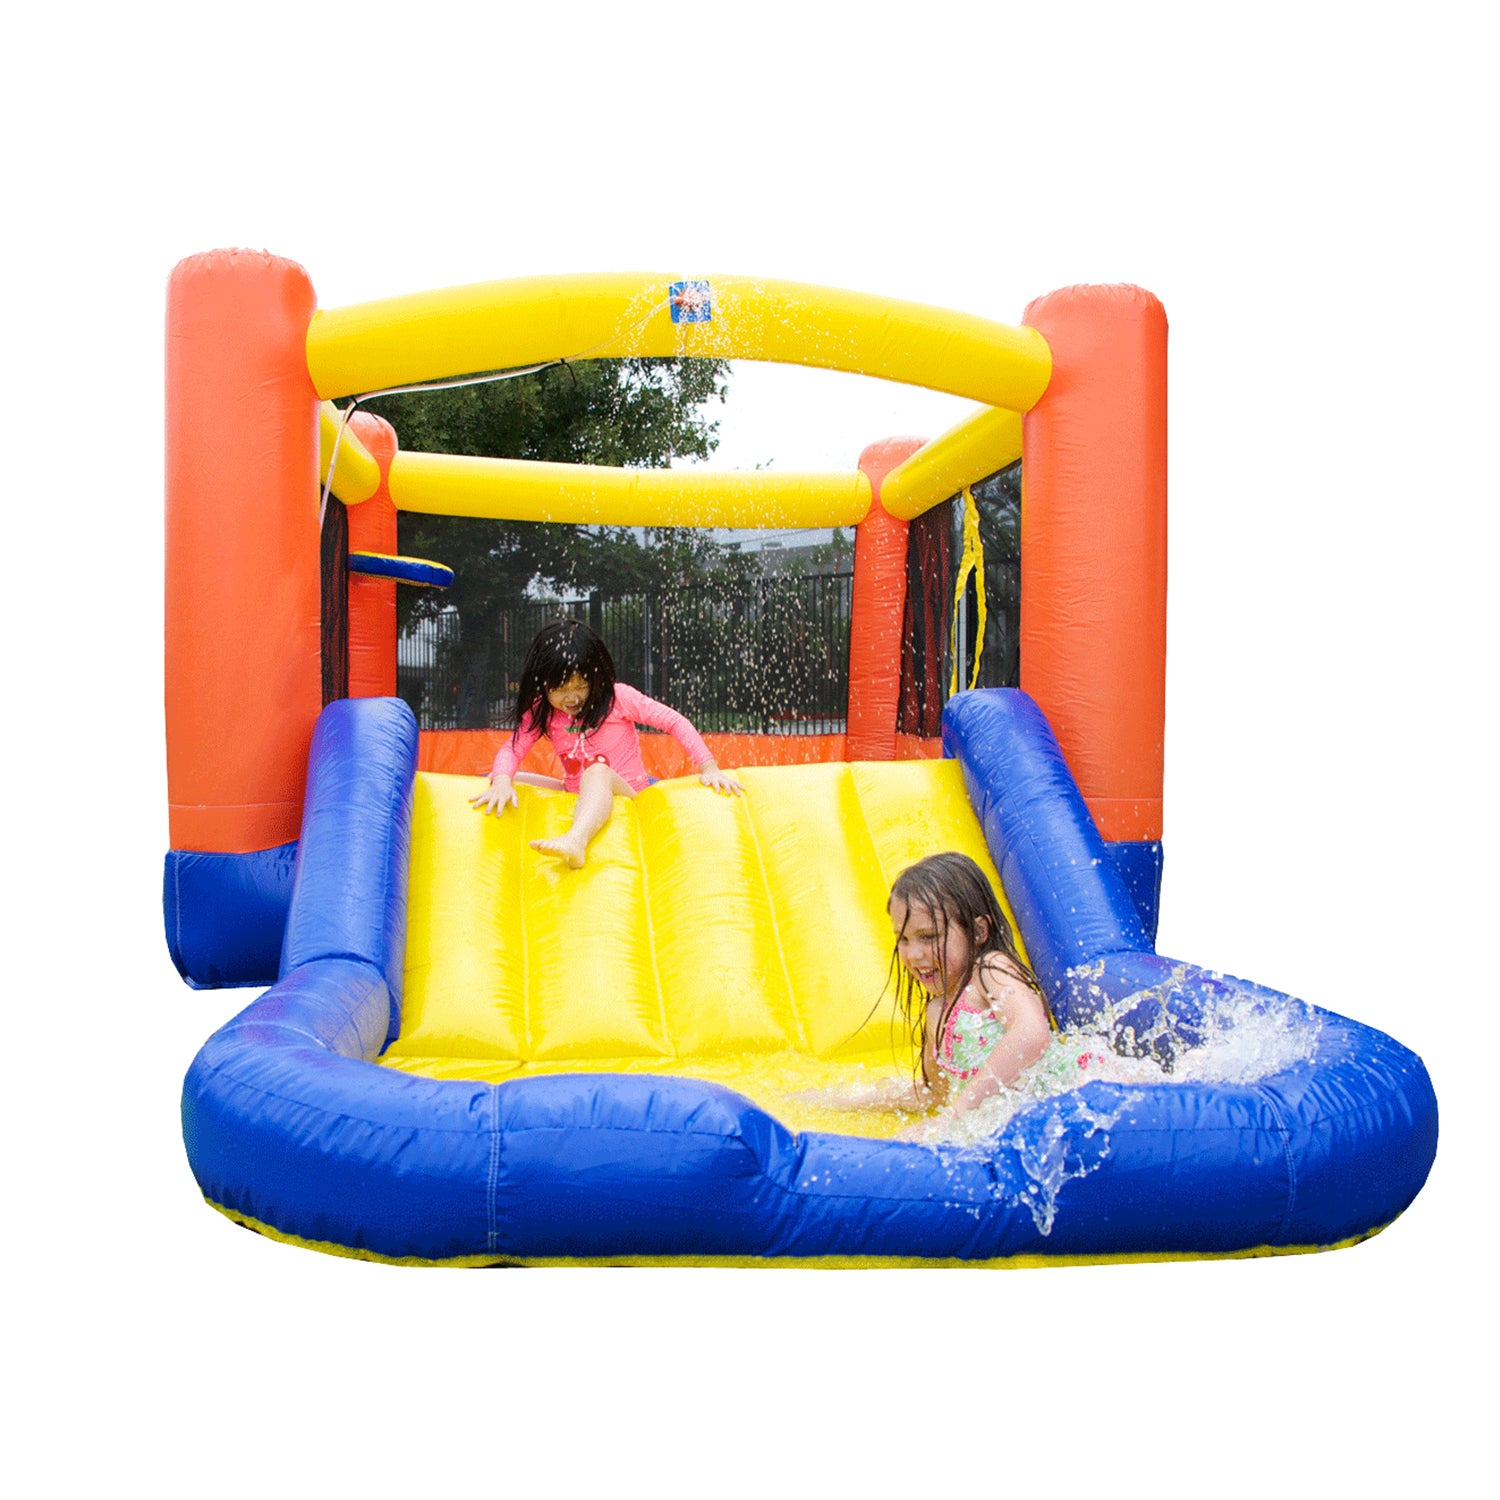 buy direct lighweight rental grade orange and blue oj bounce house inflatable slide with splash pool for kids